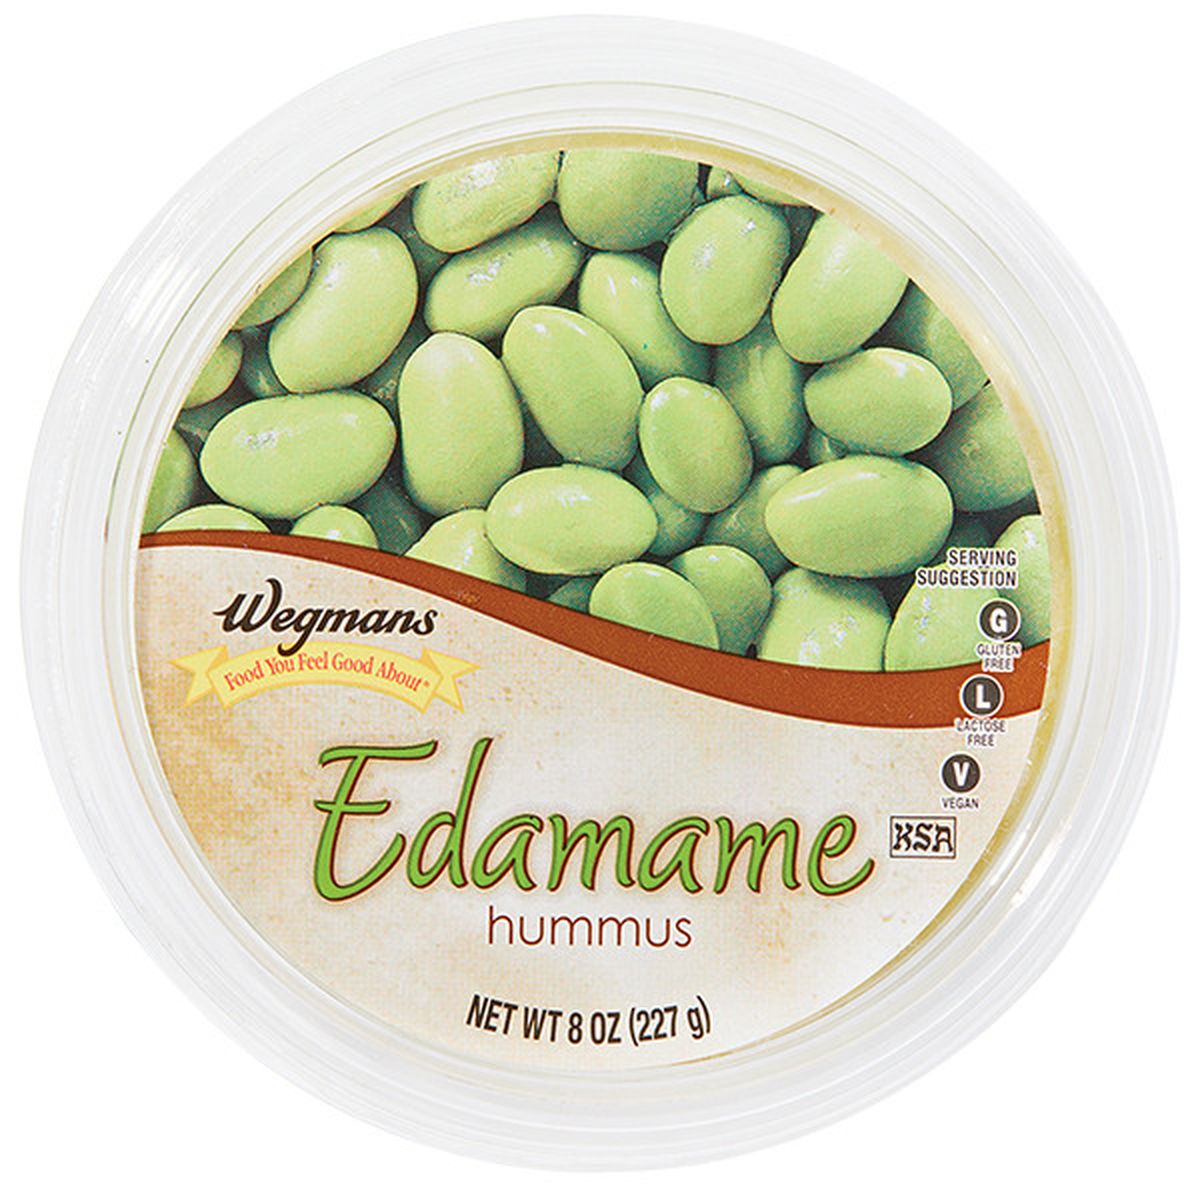 Calories in Wegmans Edamame Hummus